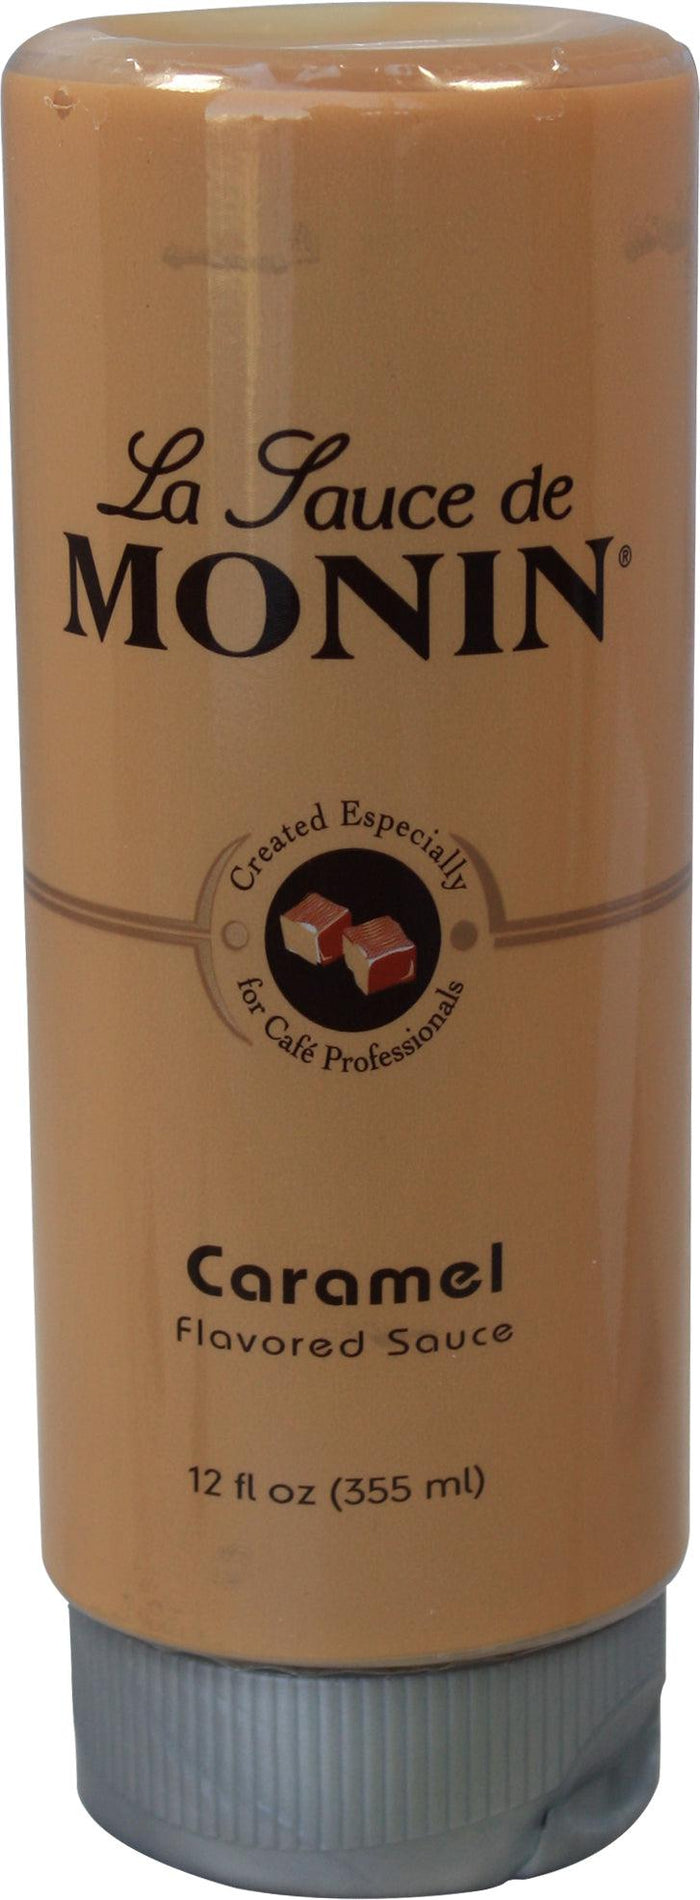 Monin - Caramel Sauce